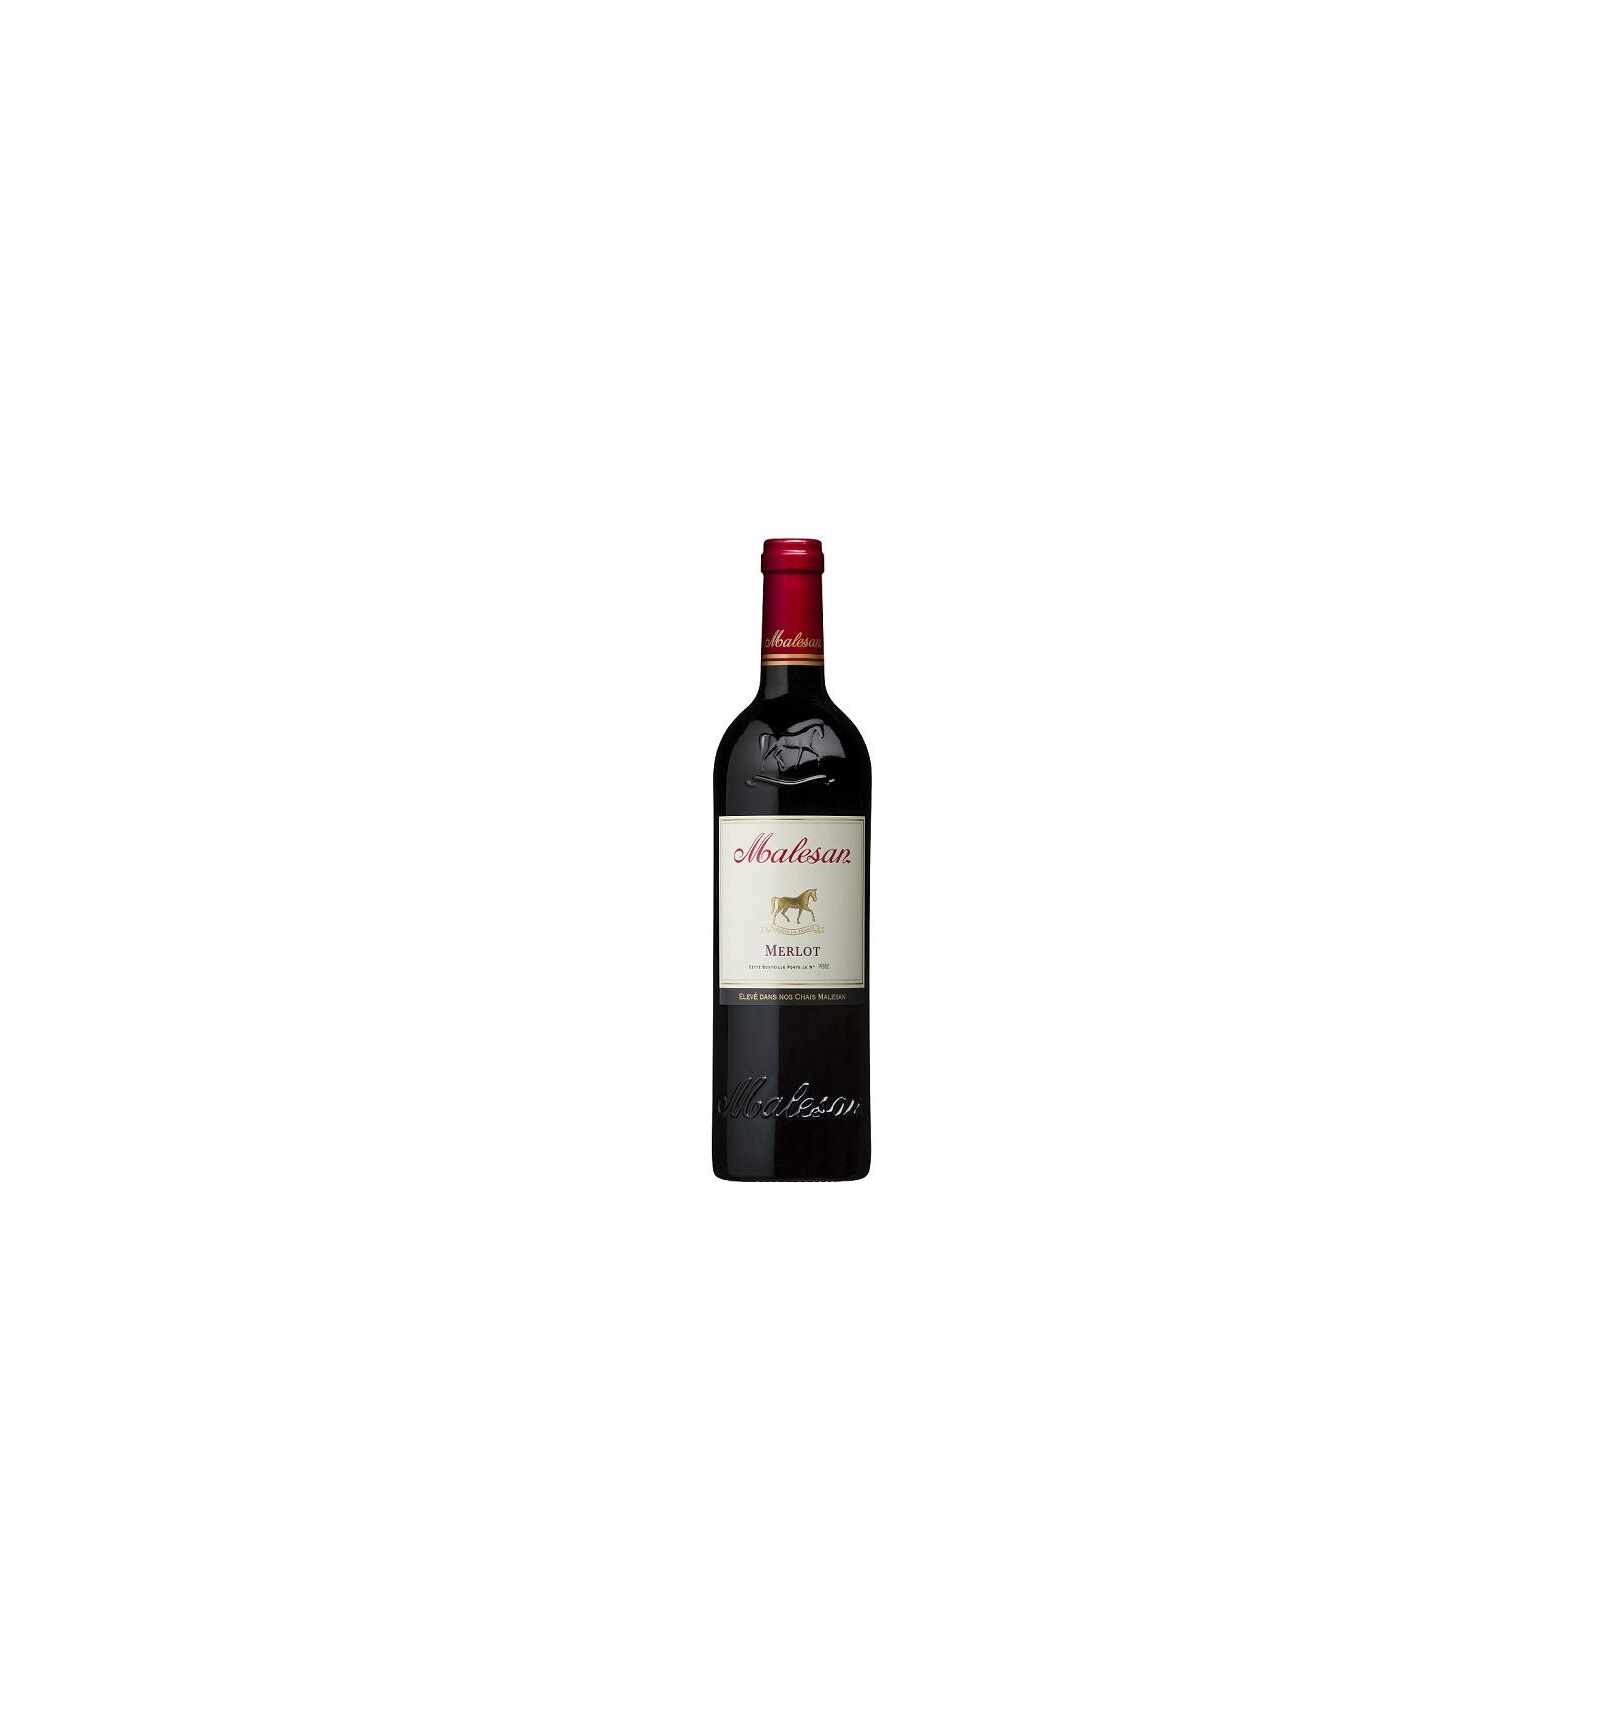 Vin rosu, Merlot, Malesan Bordeaux, 0.75L, Franta